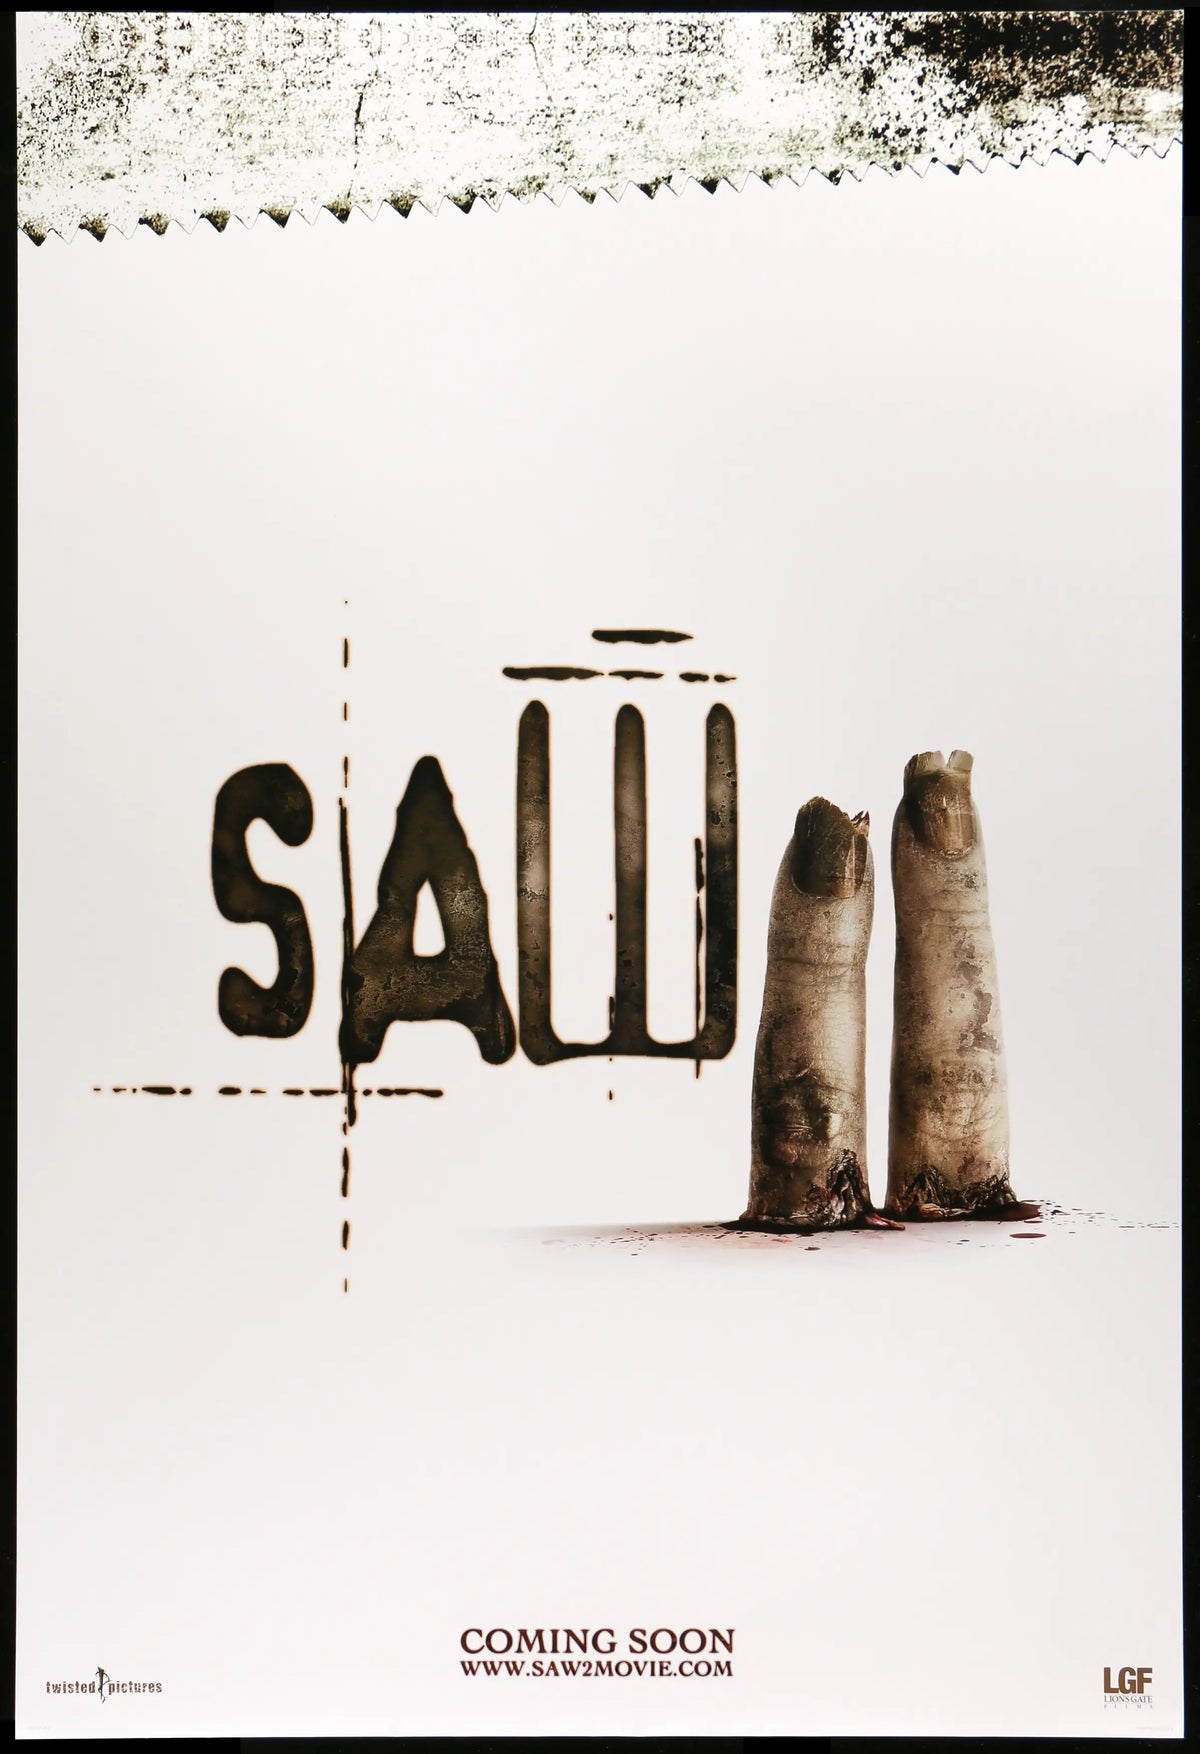 Saw II (2005) original movie poster for sale at Original Film Art